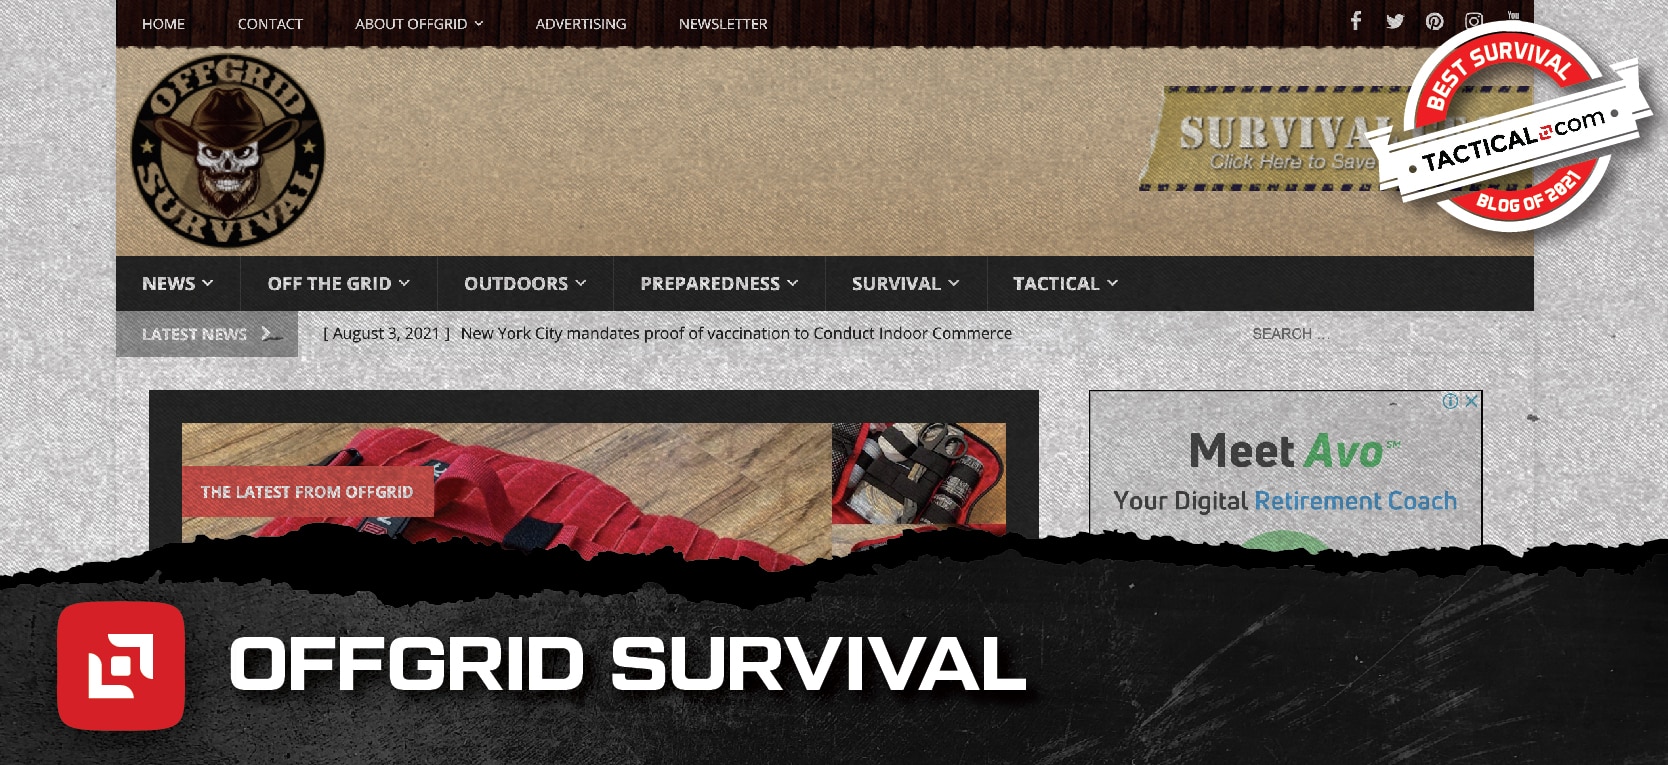 OFFGRID Survival homepage